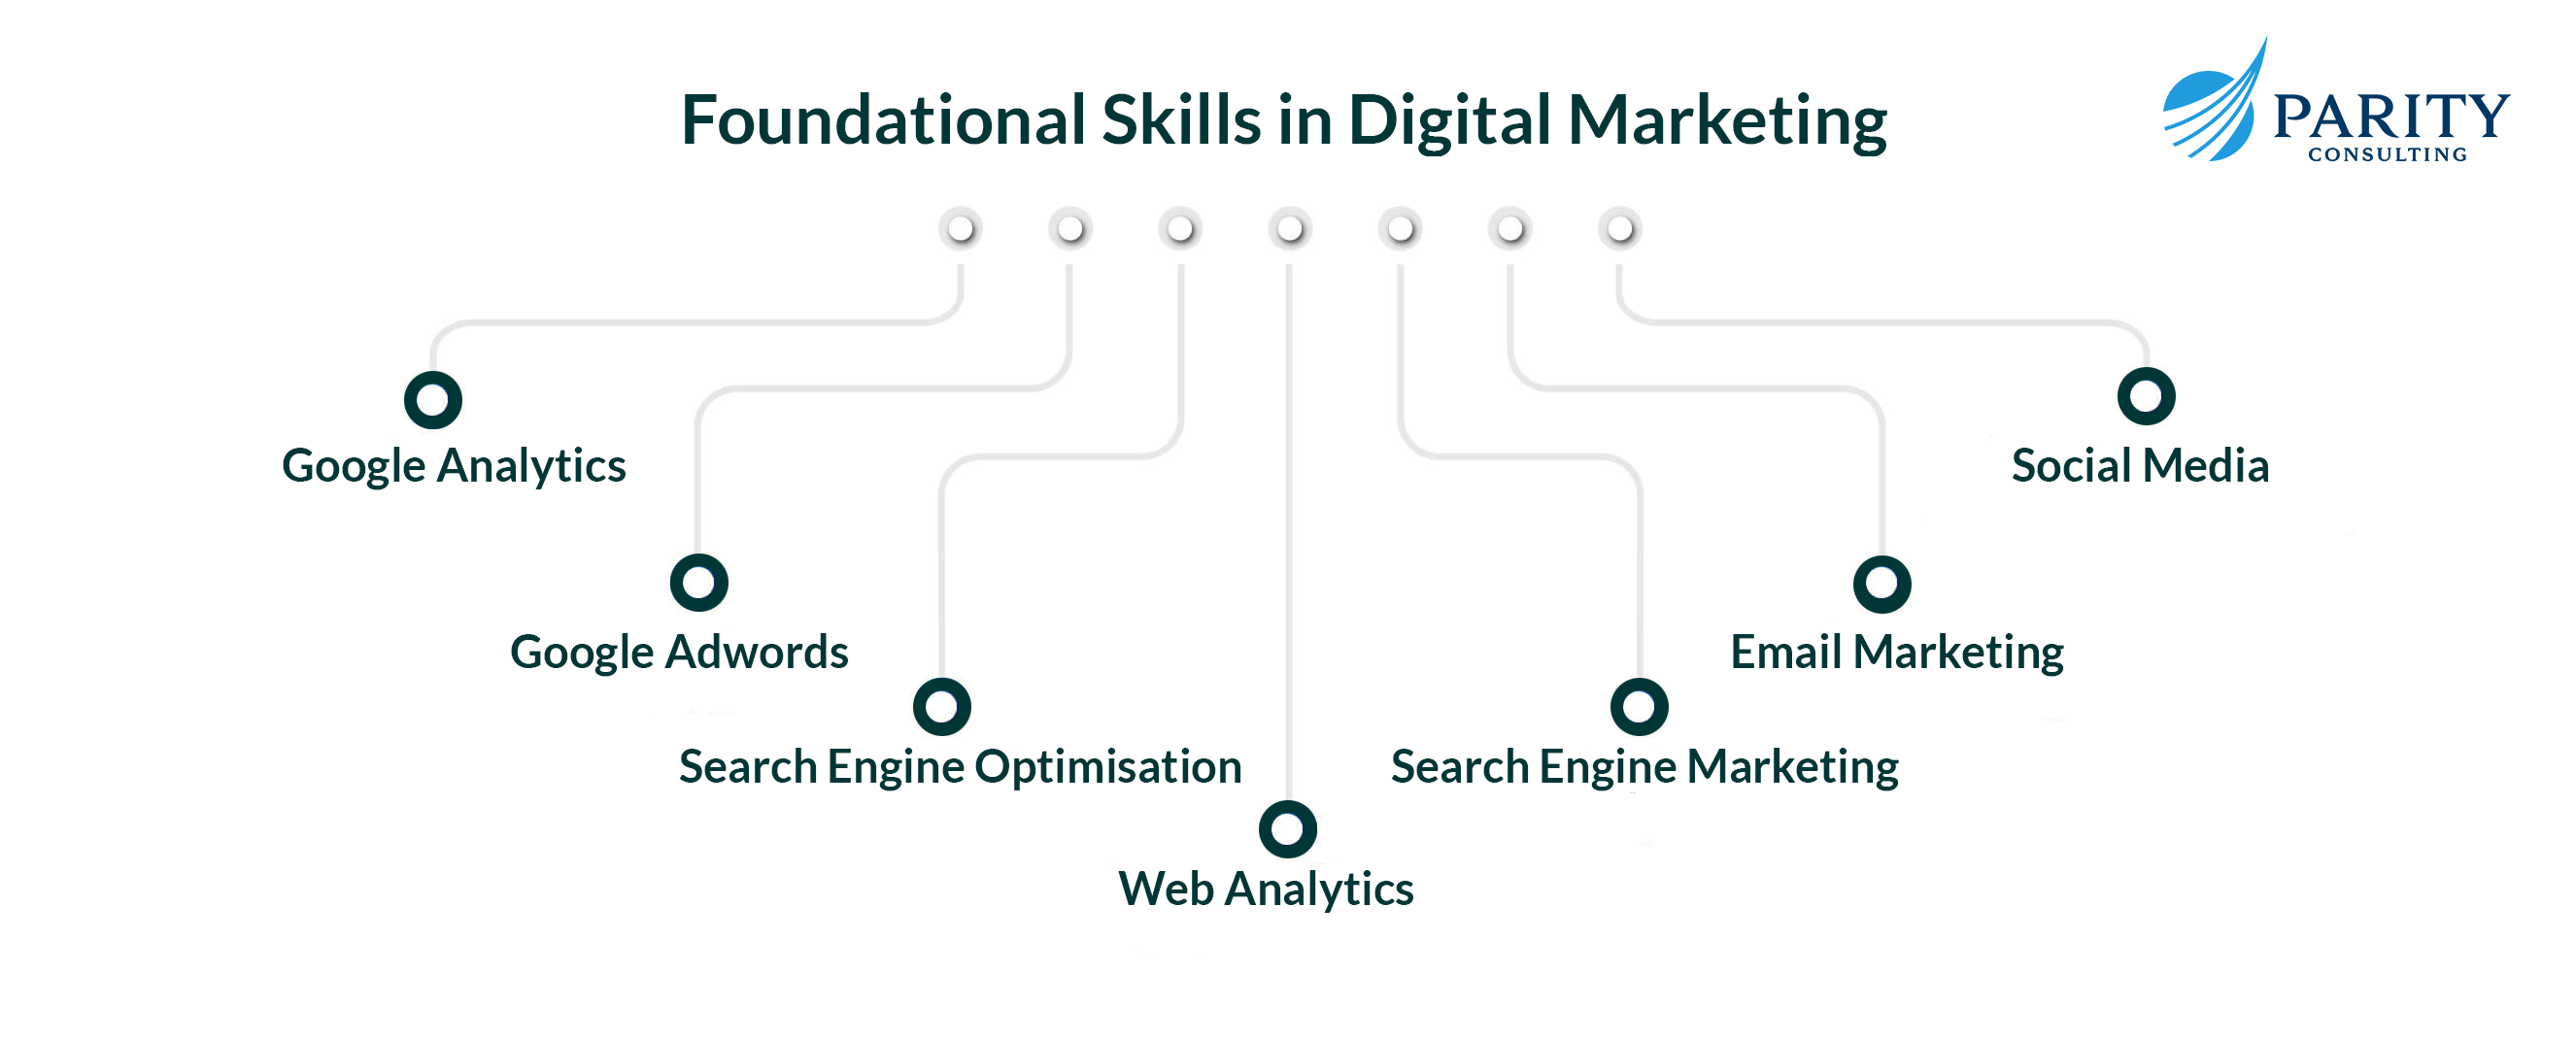 Foundational Skills in Digital Marketing | Parity Consulting